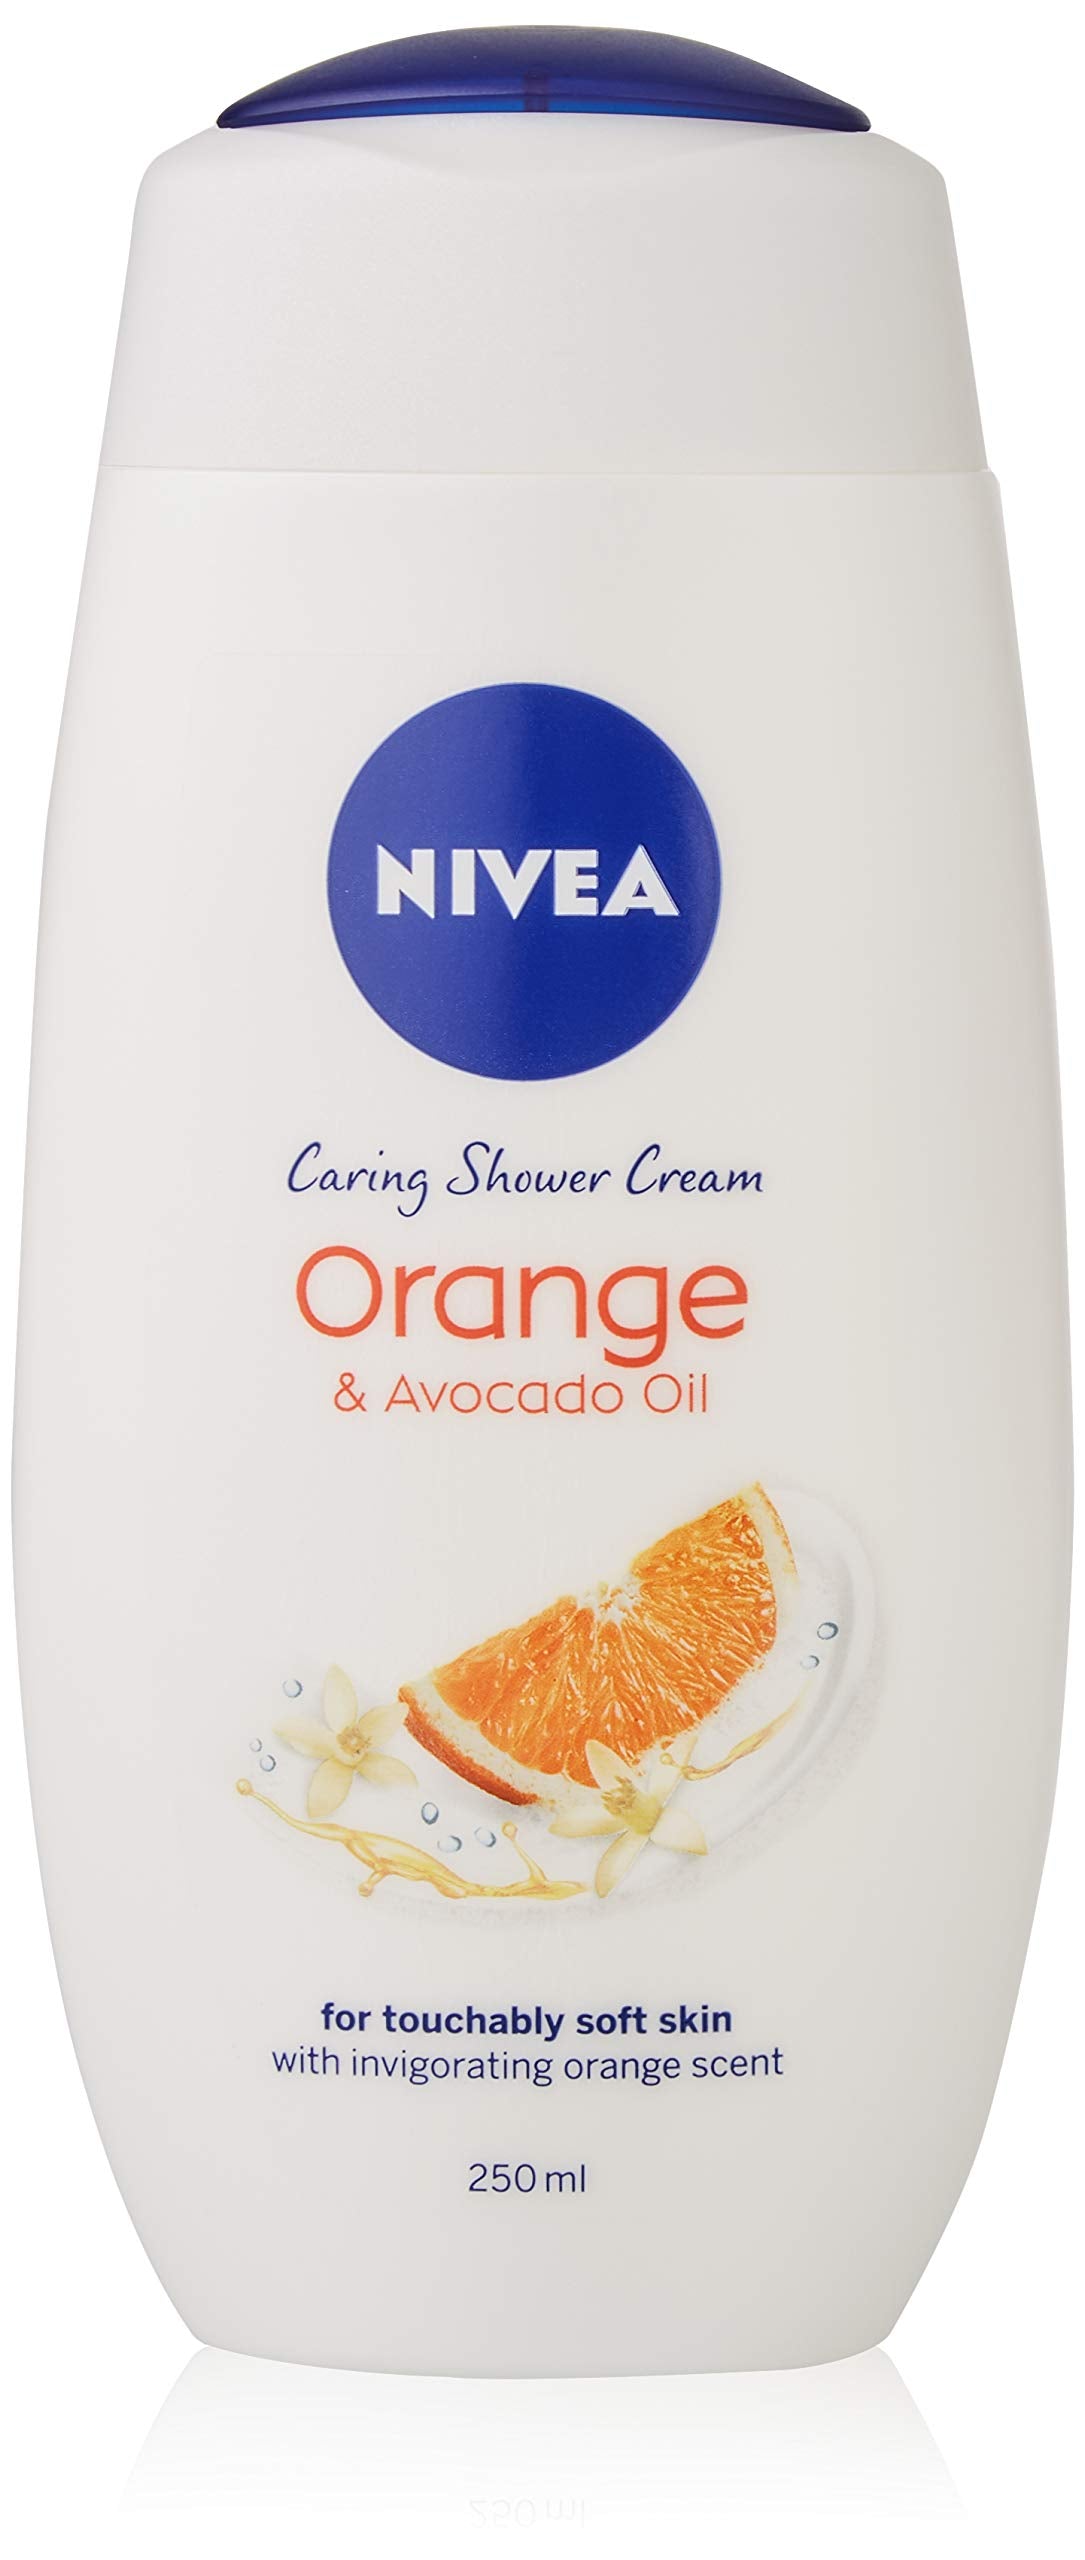 NIVEA Indulgent Moisture Orange Shower Cream, Pack of 6 (6 x 250 ml), Moisturising Shower Gel with Avocado Oil Luxurious Body Wash for Women, Body Wash